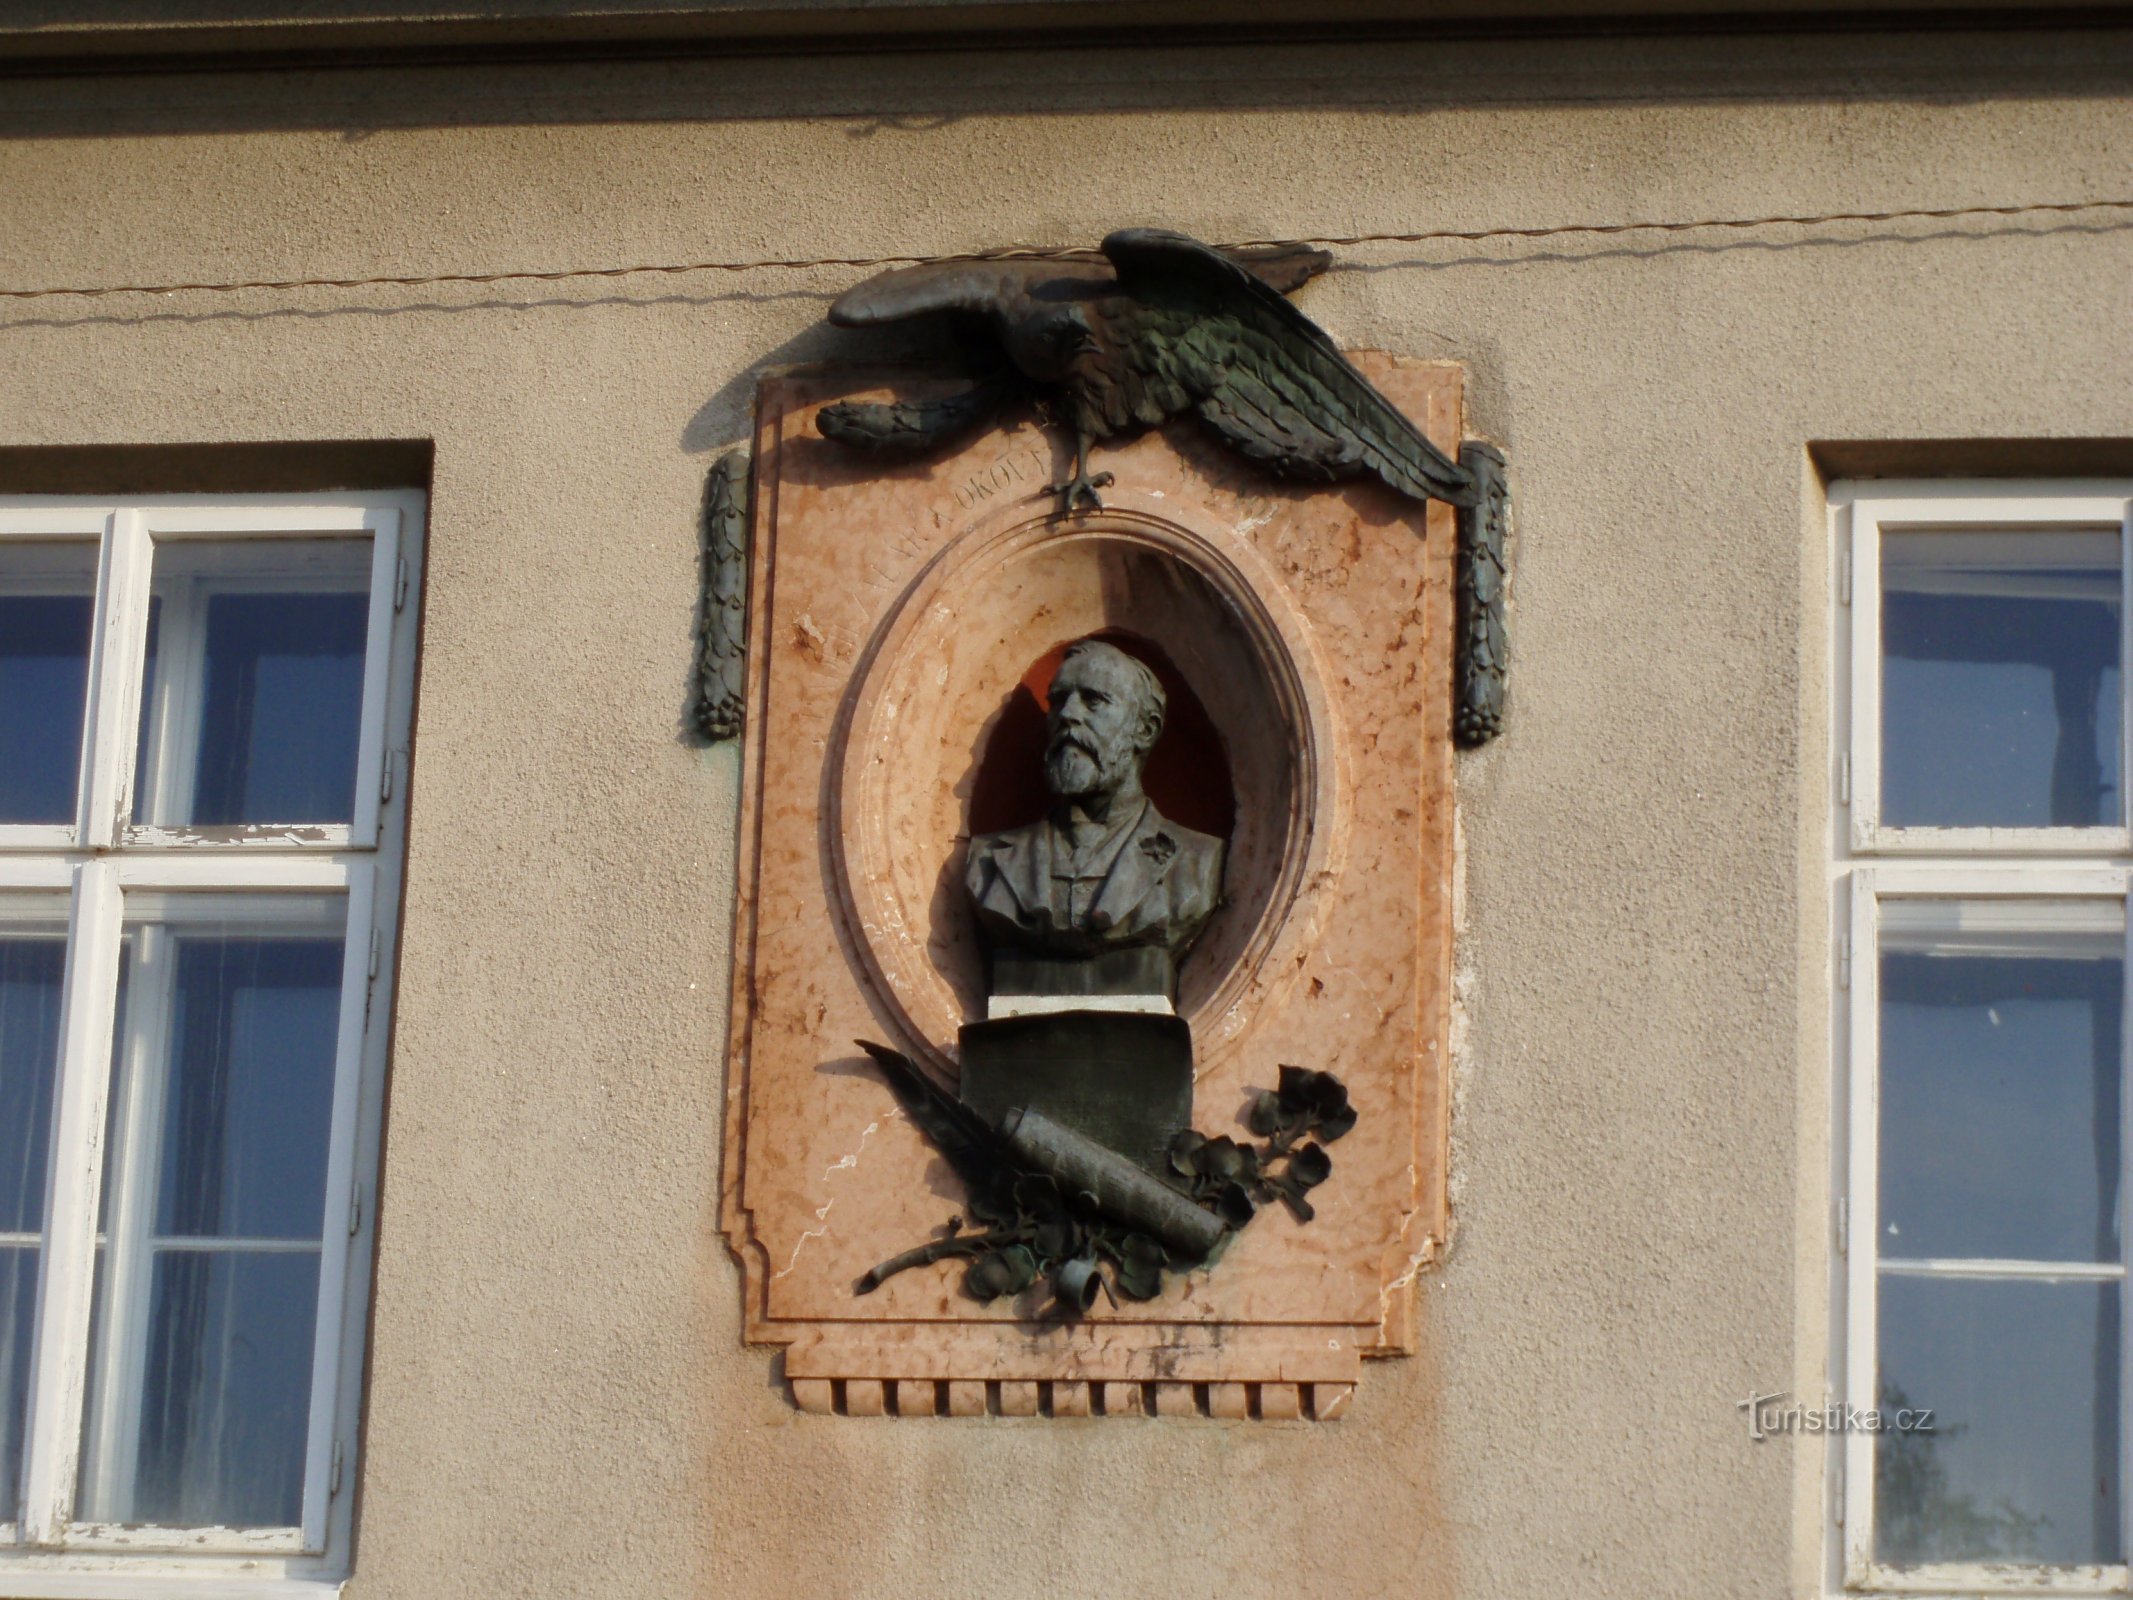 Spominska plošča z doprsnim kipom JUDr. Julia Grégra pred izginotjem doprsnega kipa (Hradec Králové)